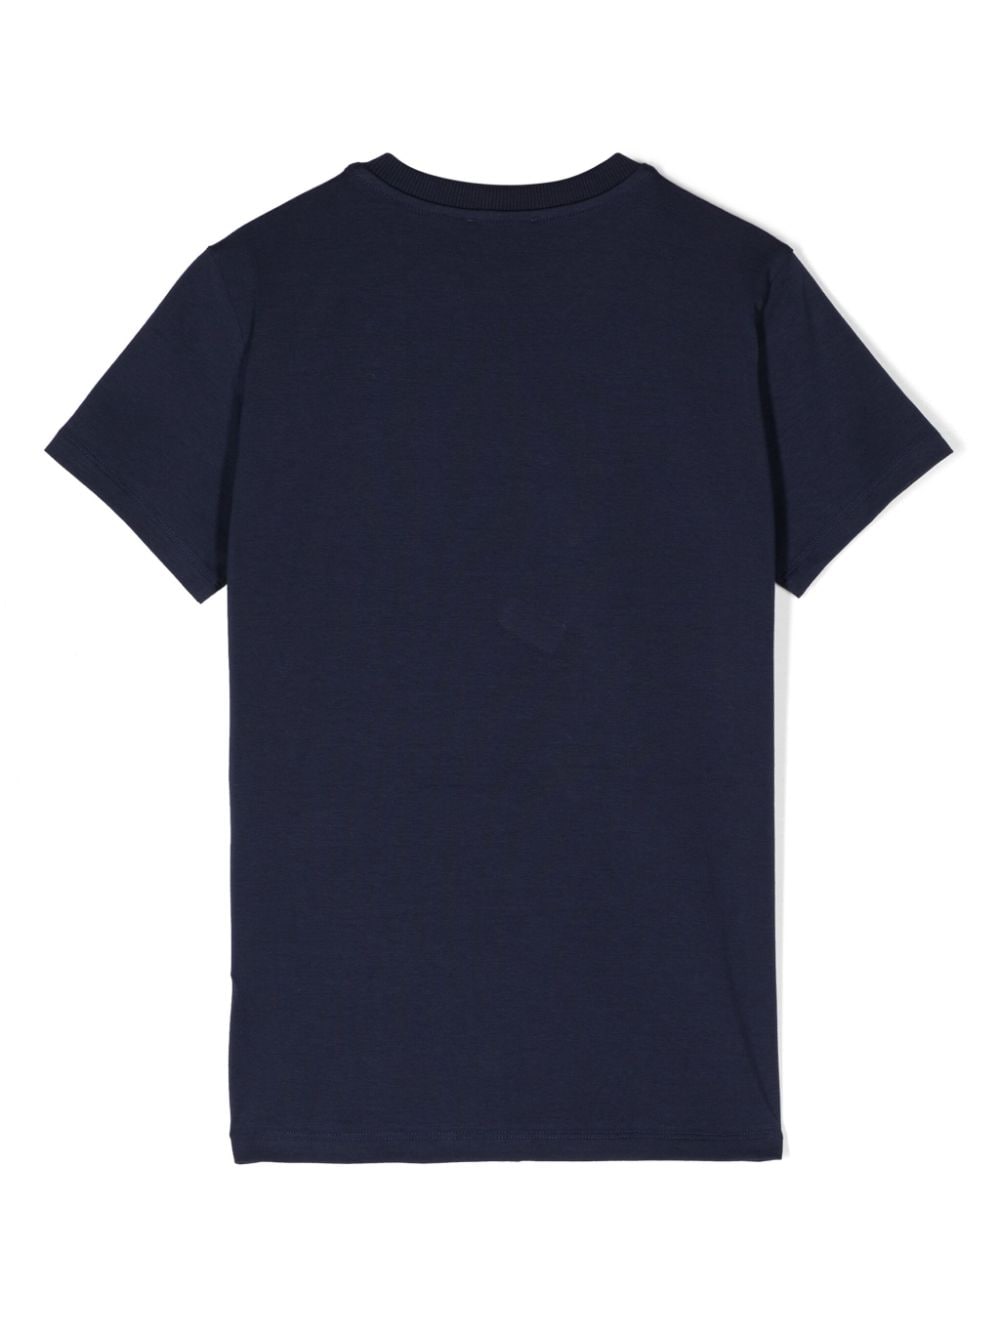 Blue children's t-shirt with logo